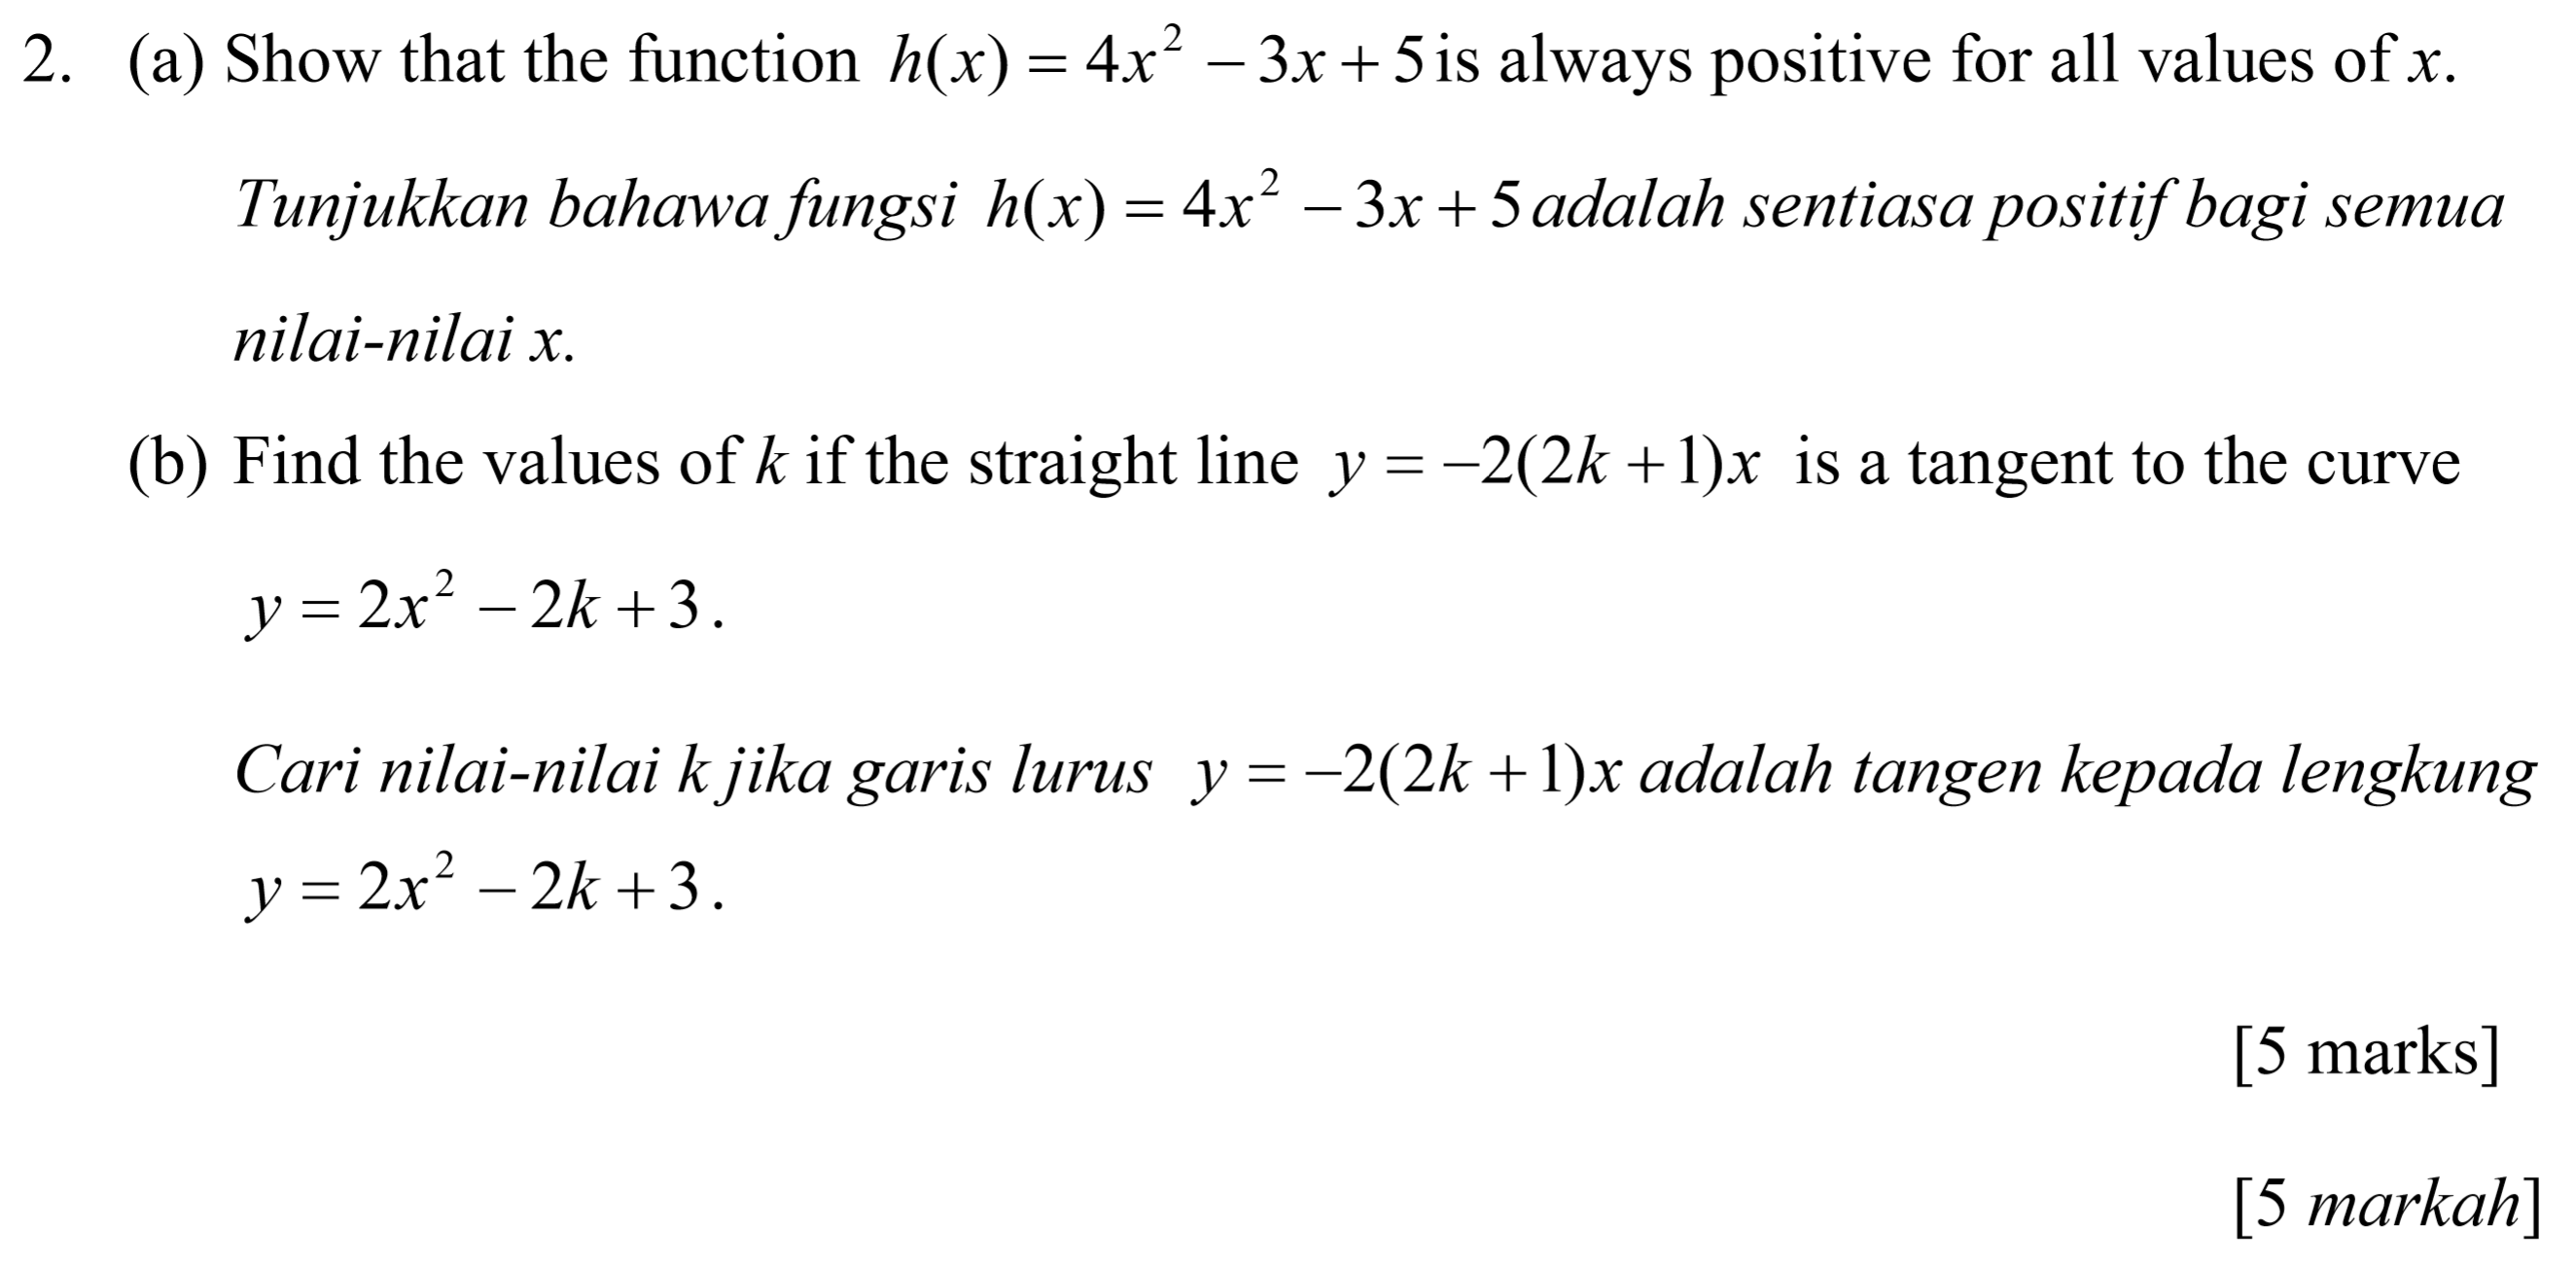 Trick Question in Quadratic Function (AddMath SPM)